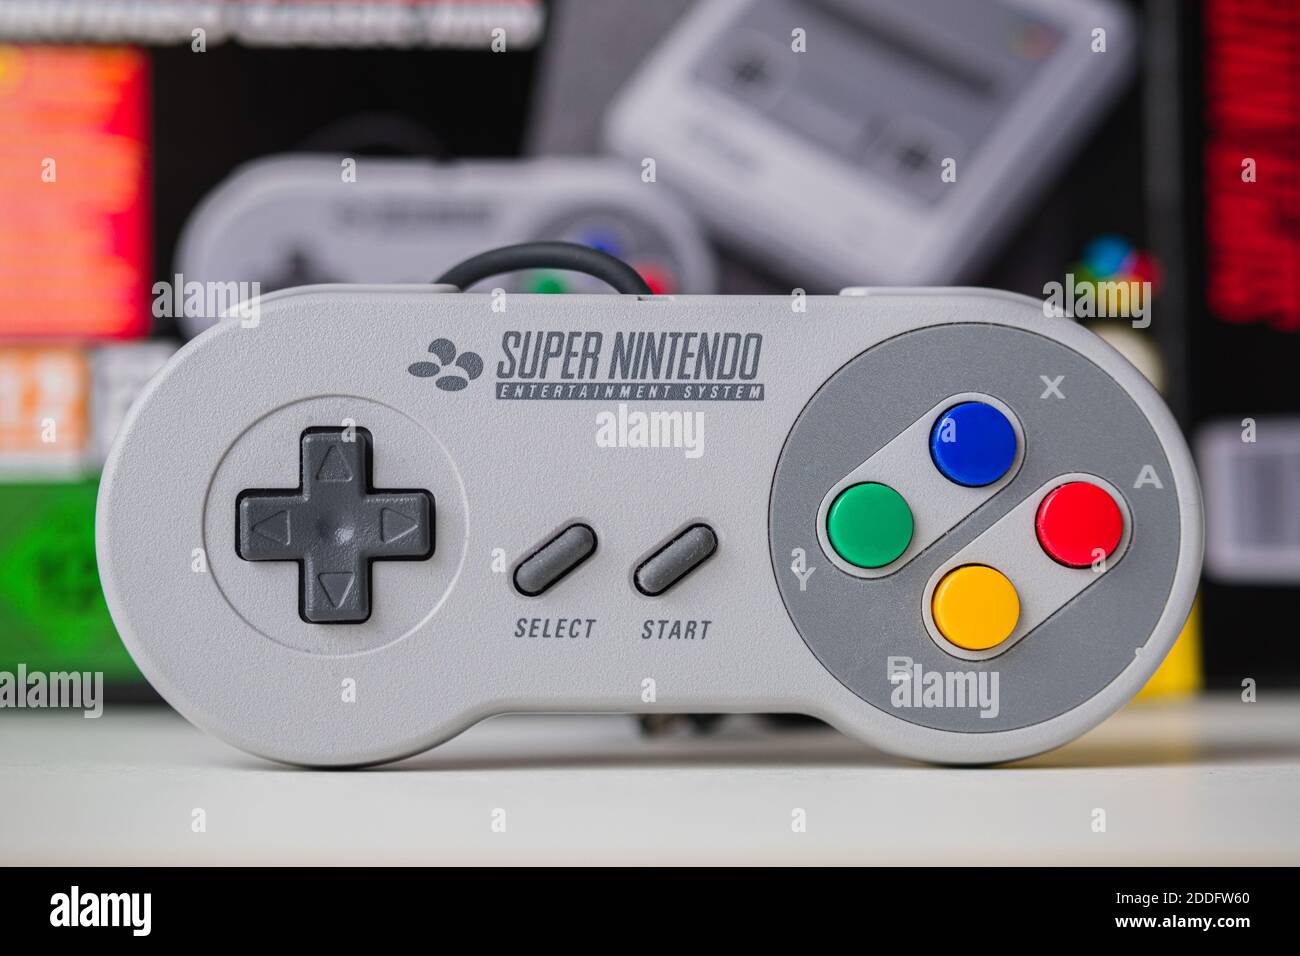 SNES Classic Edition Retro Portable Console Controller – Super Nintendo Entertainment System Stock Photo